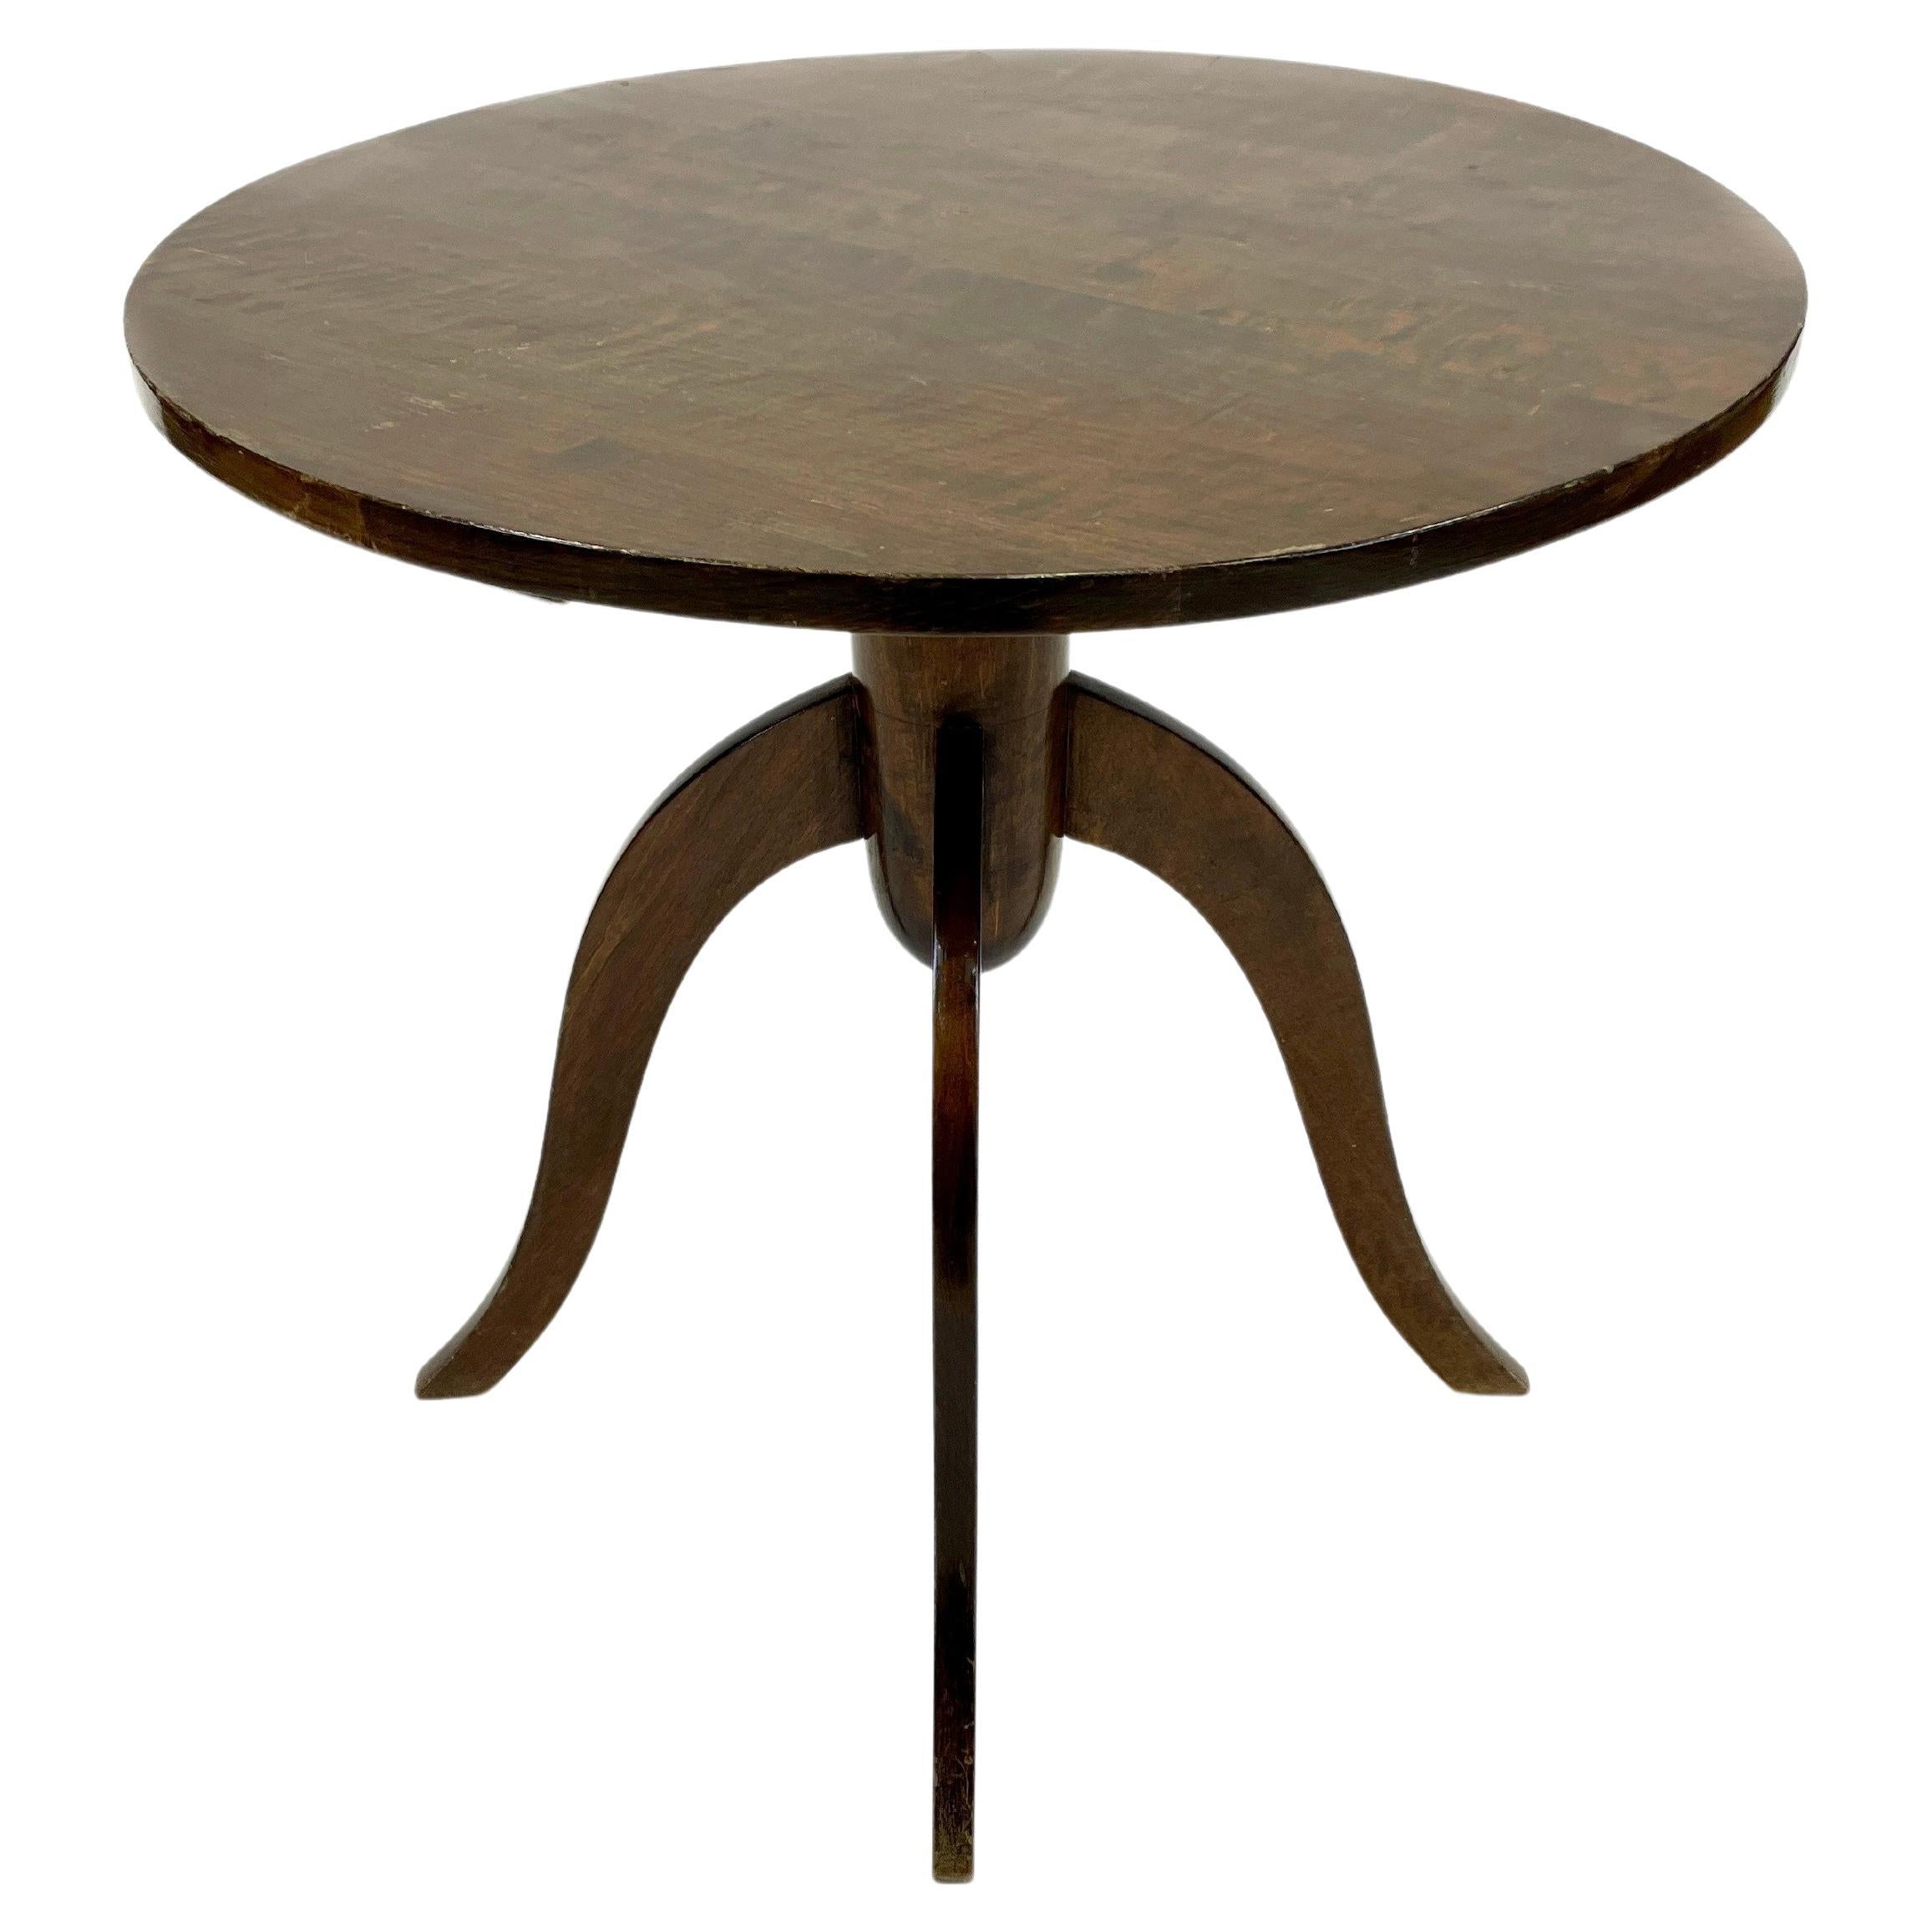 Gunnel Nyman Finnish Modern Side Table, 1937 For Sale